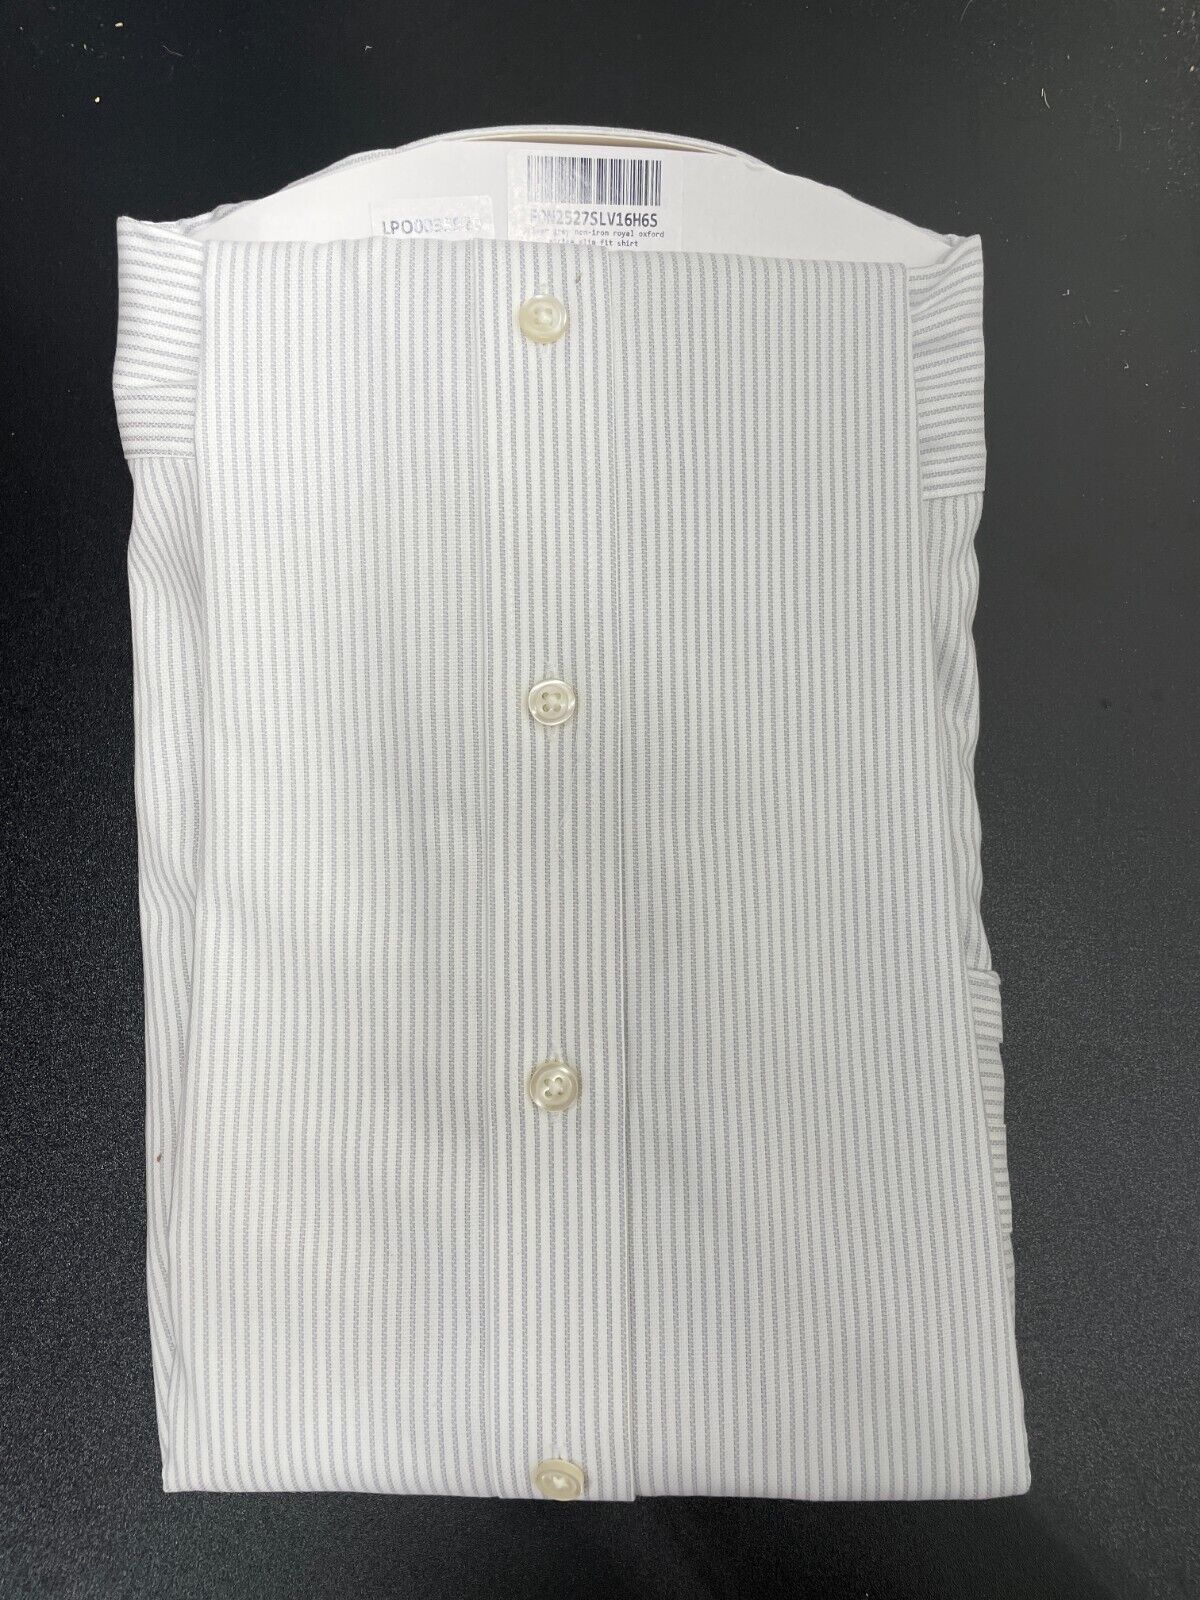 Charles Tyrwhitt Mens 16.5/36 Non-Iron Royal Oxford Stripe Dress Shirt Silver